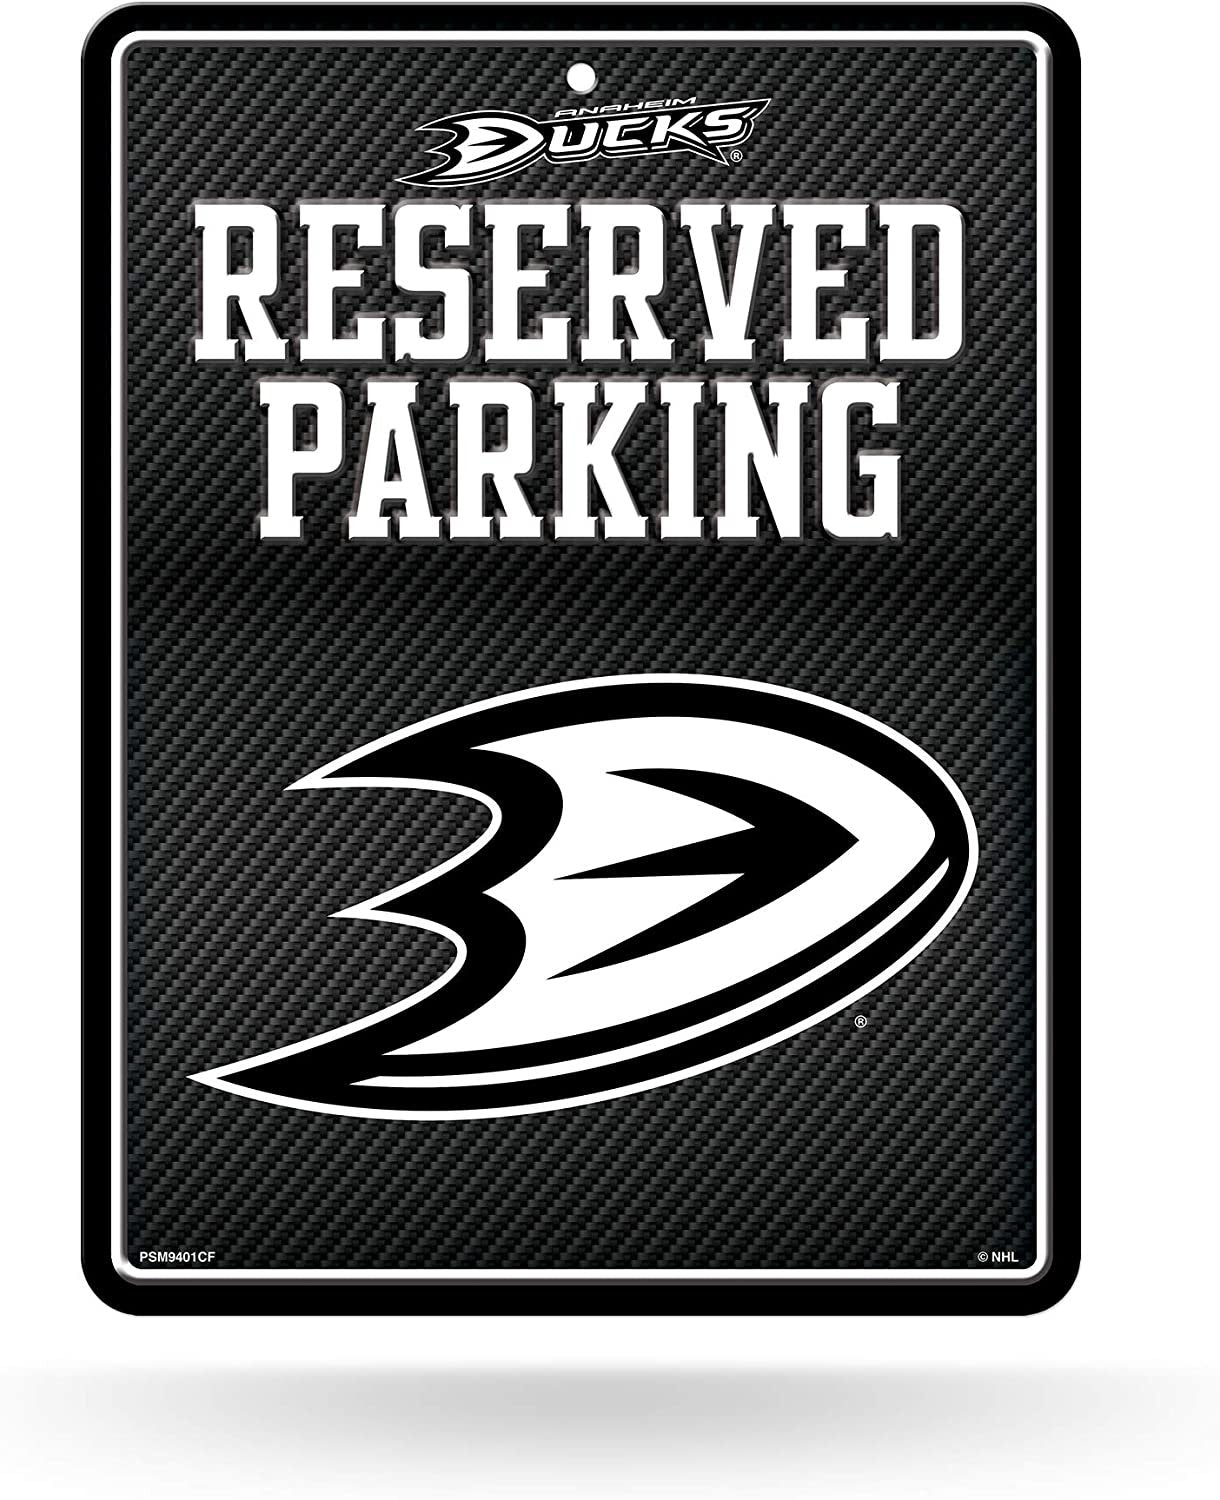 Anaheim Ducks Metal Parking Sign, Carbon Fiber Design 8.5x11 Inch